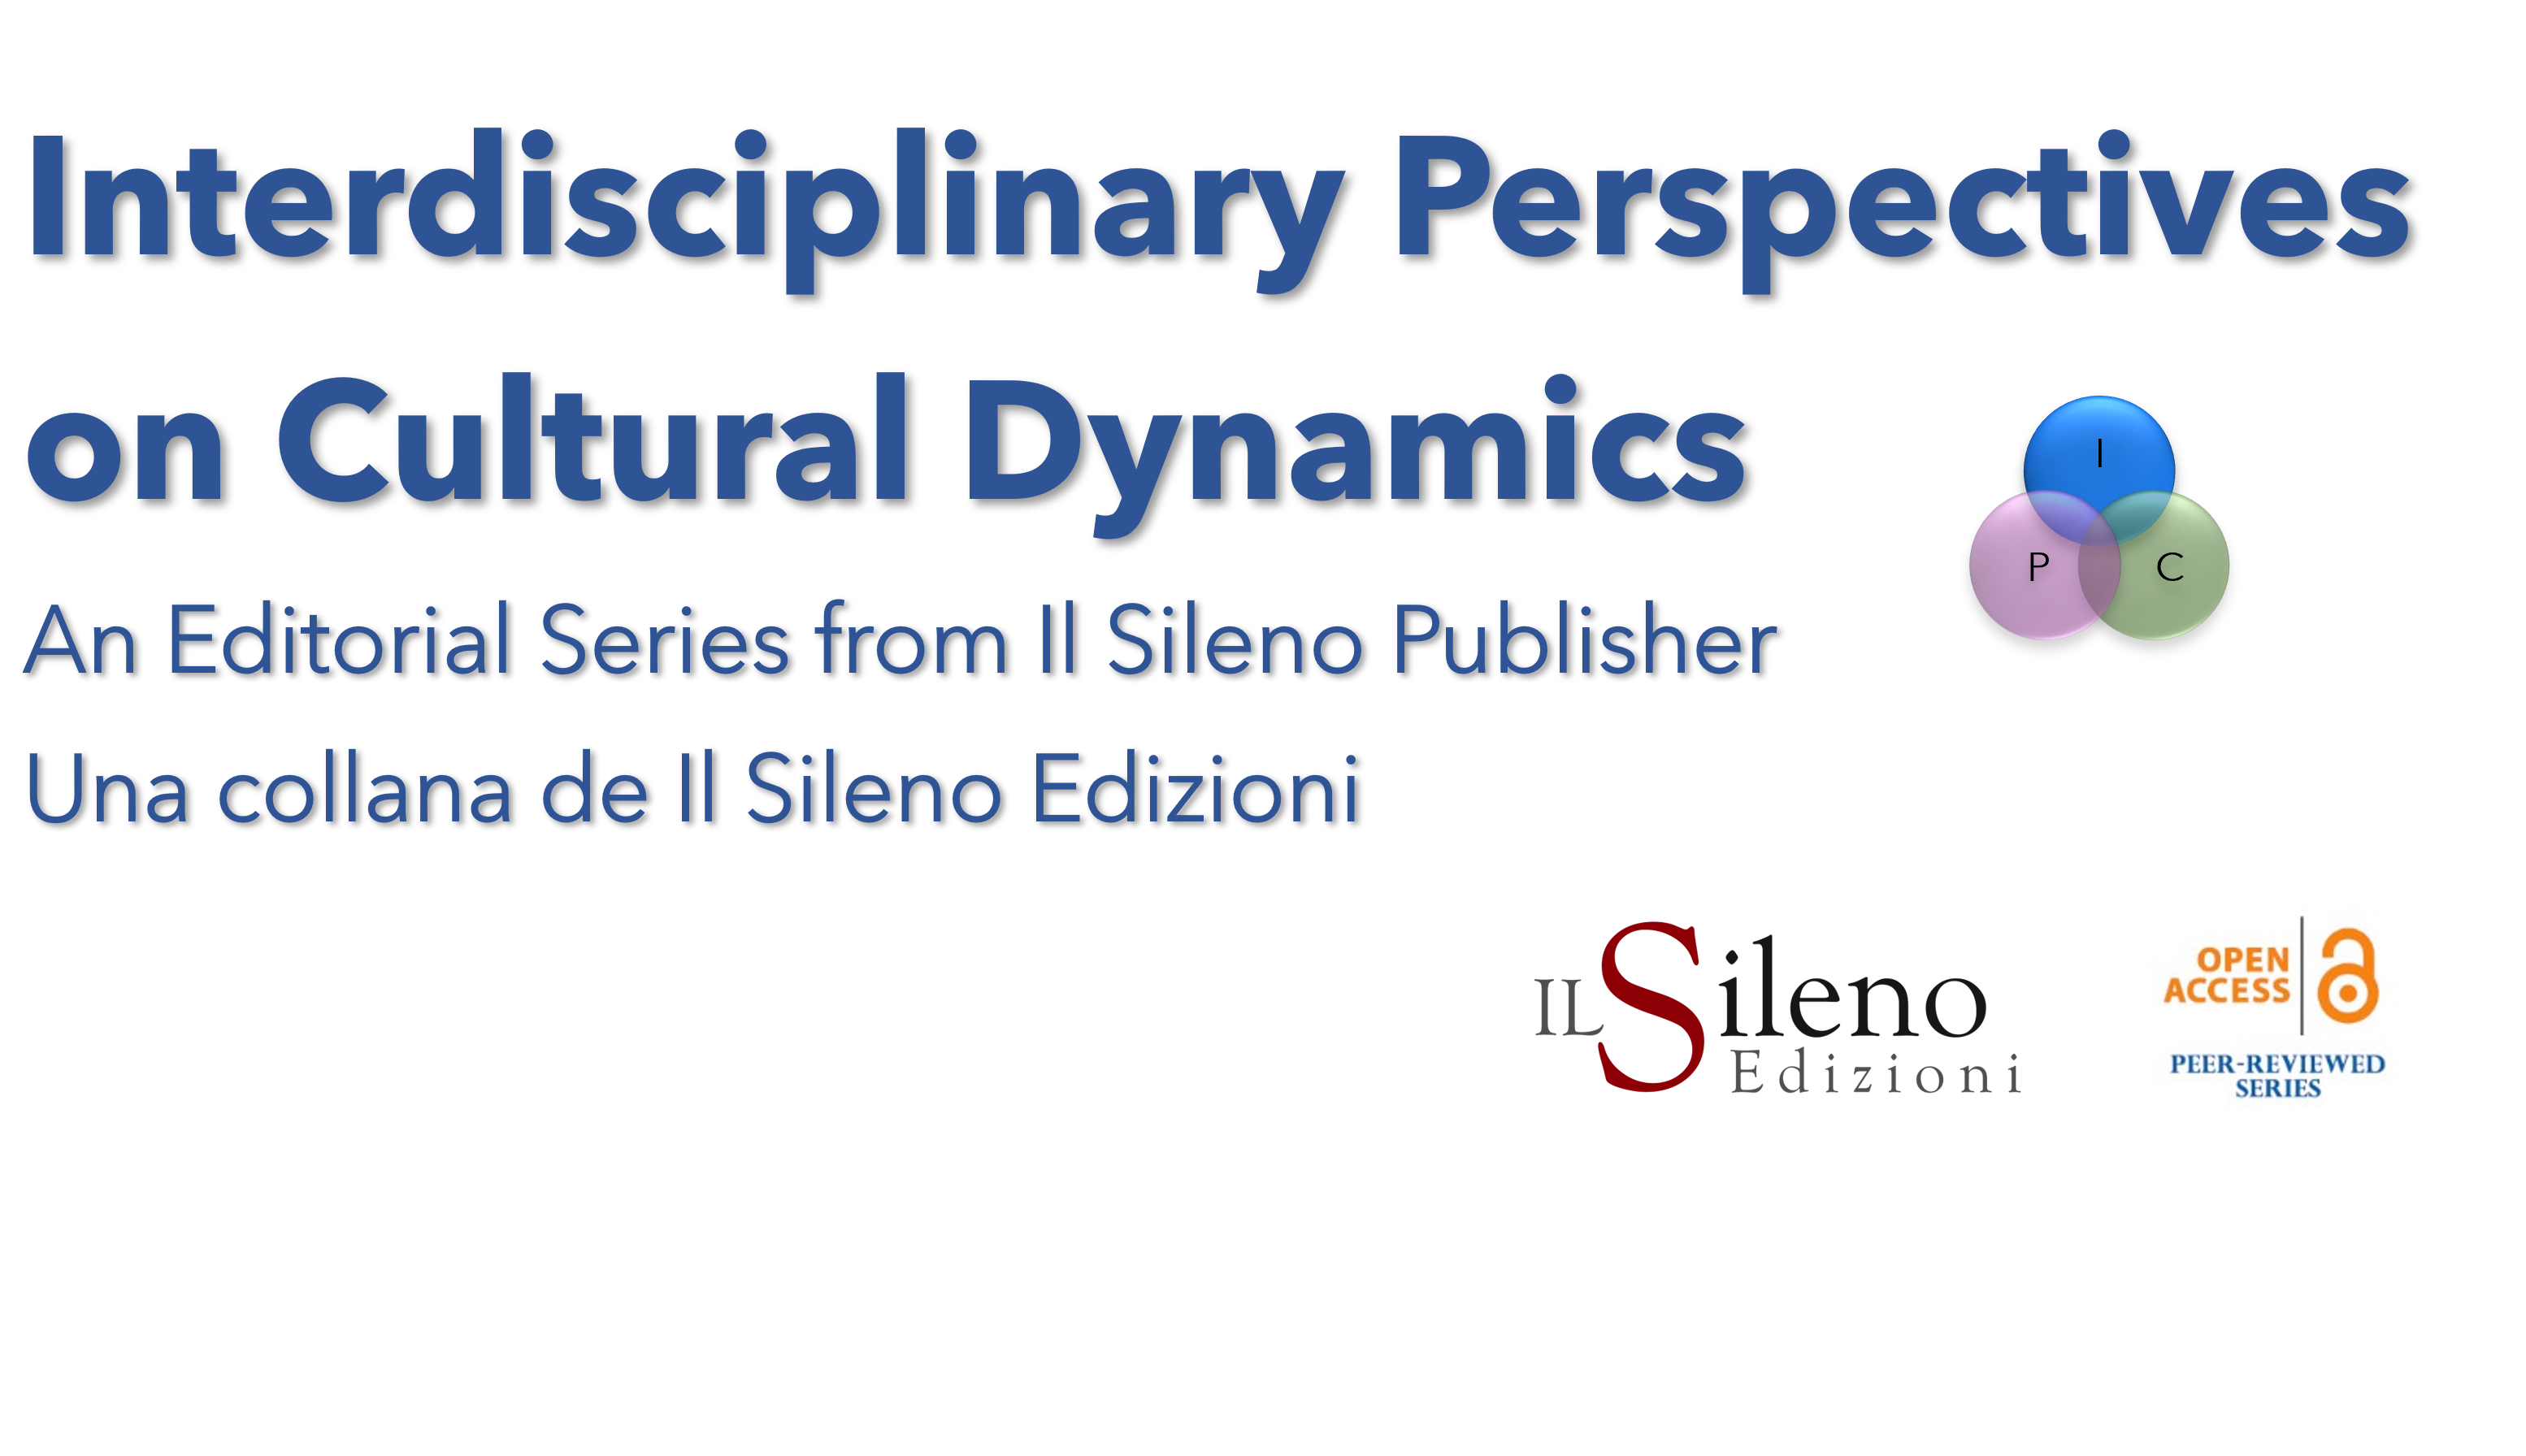 Interdisciplinary Perspectives on Cultural Dynamics